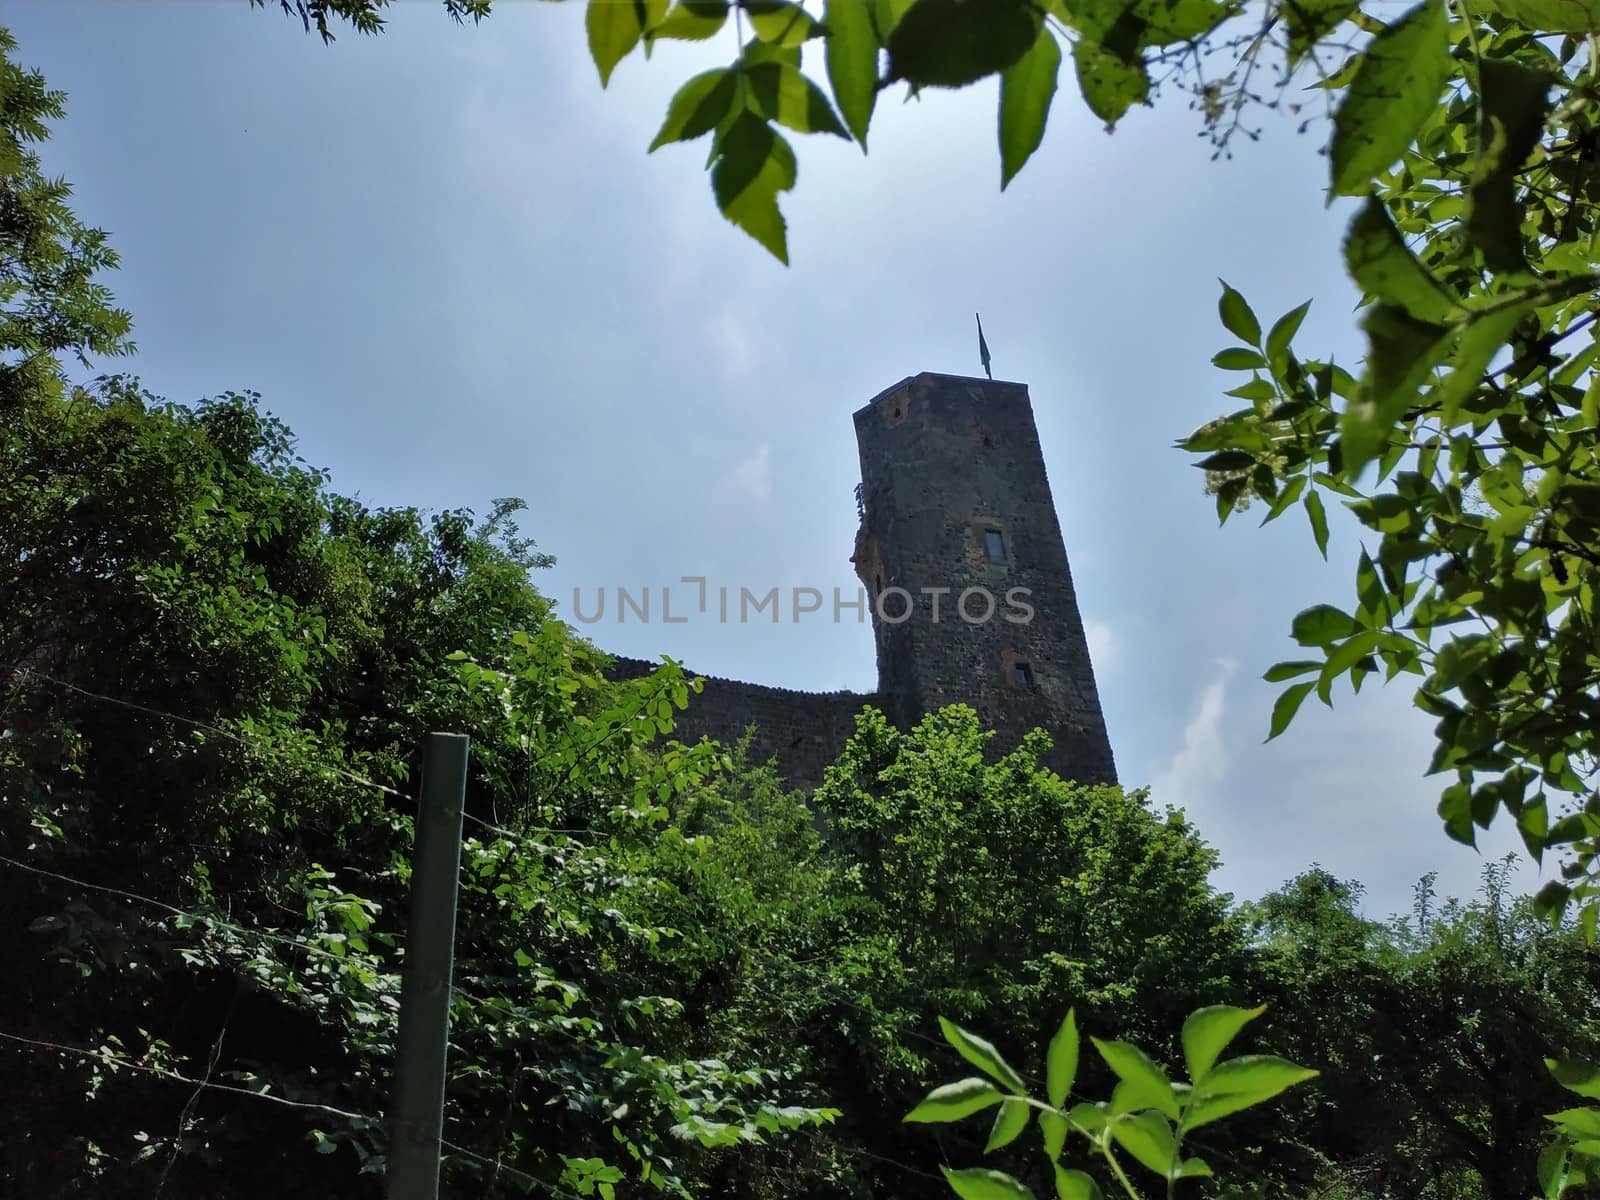 Tower of beautiful Stolpen castle hidden behind trees